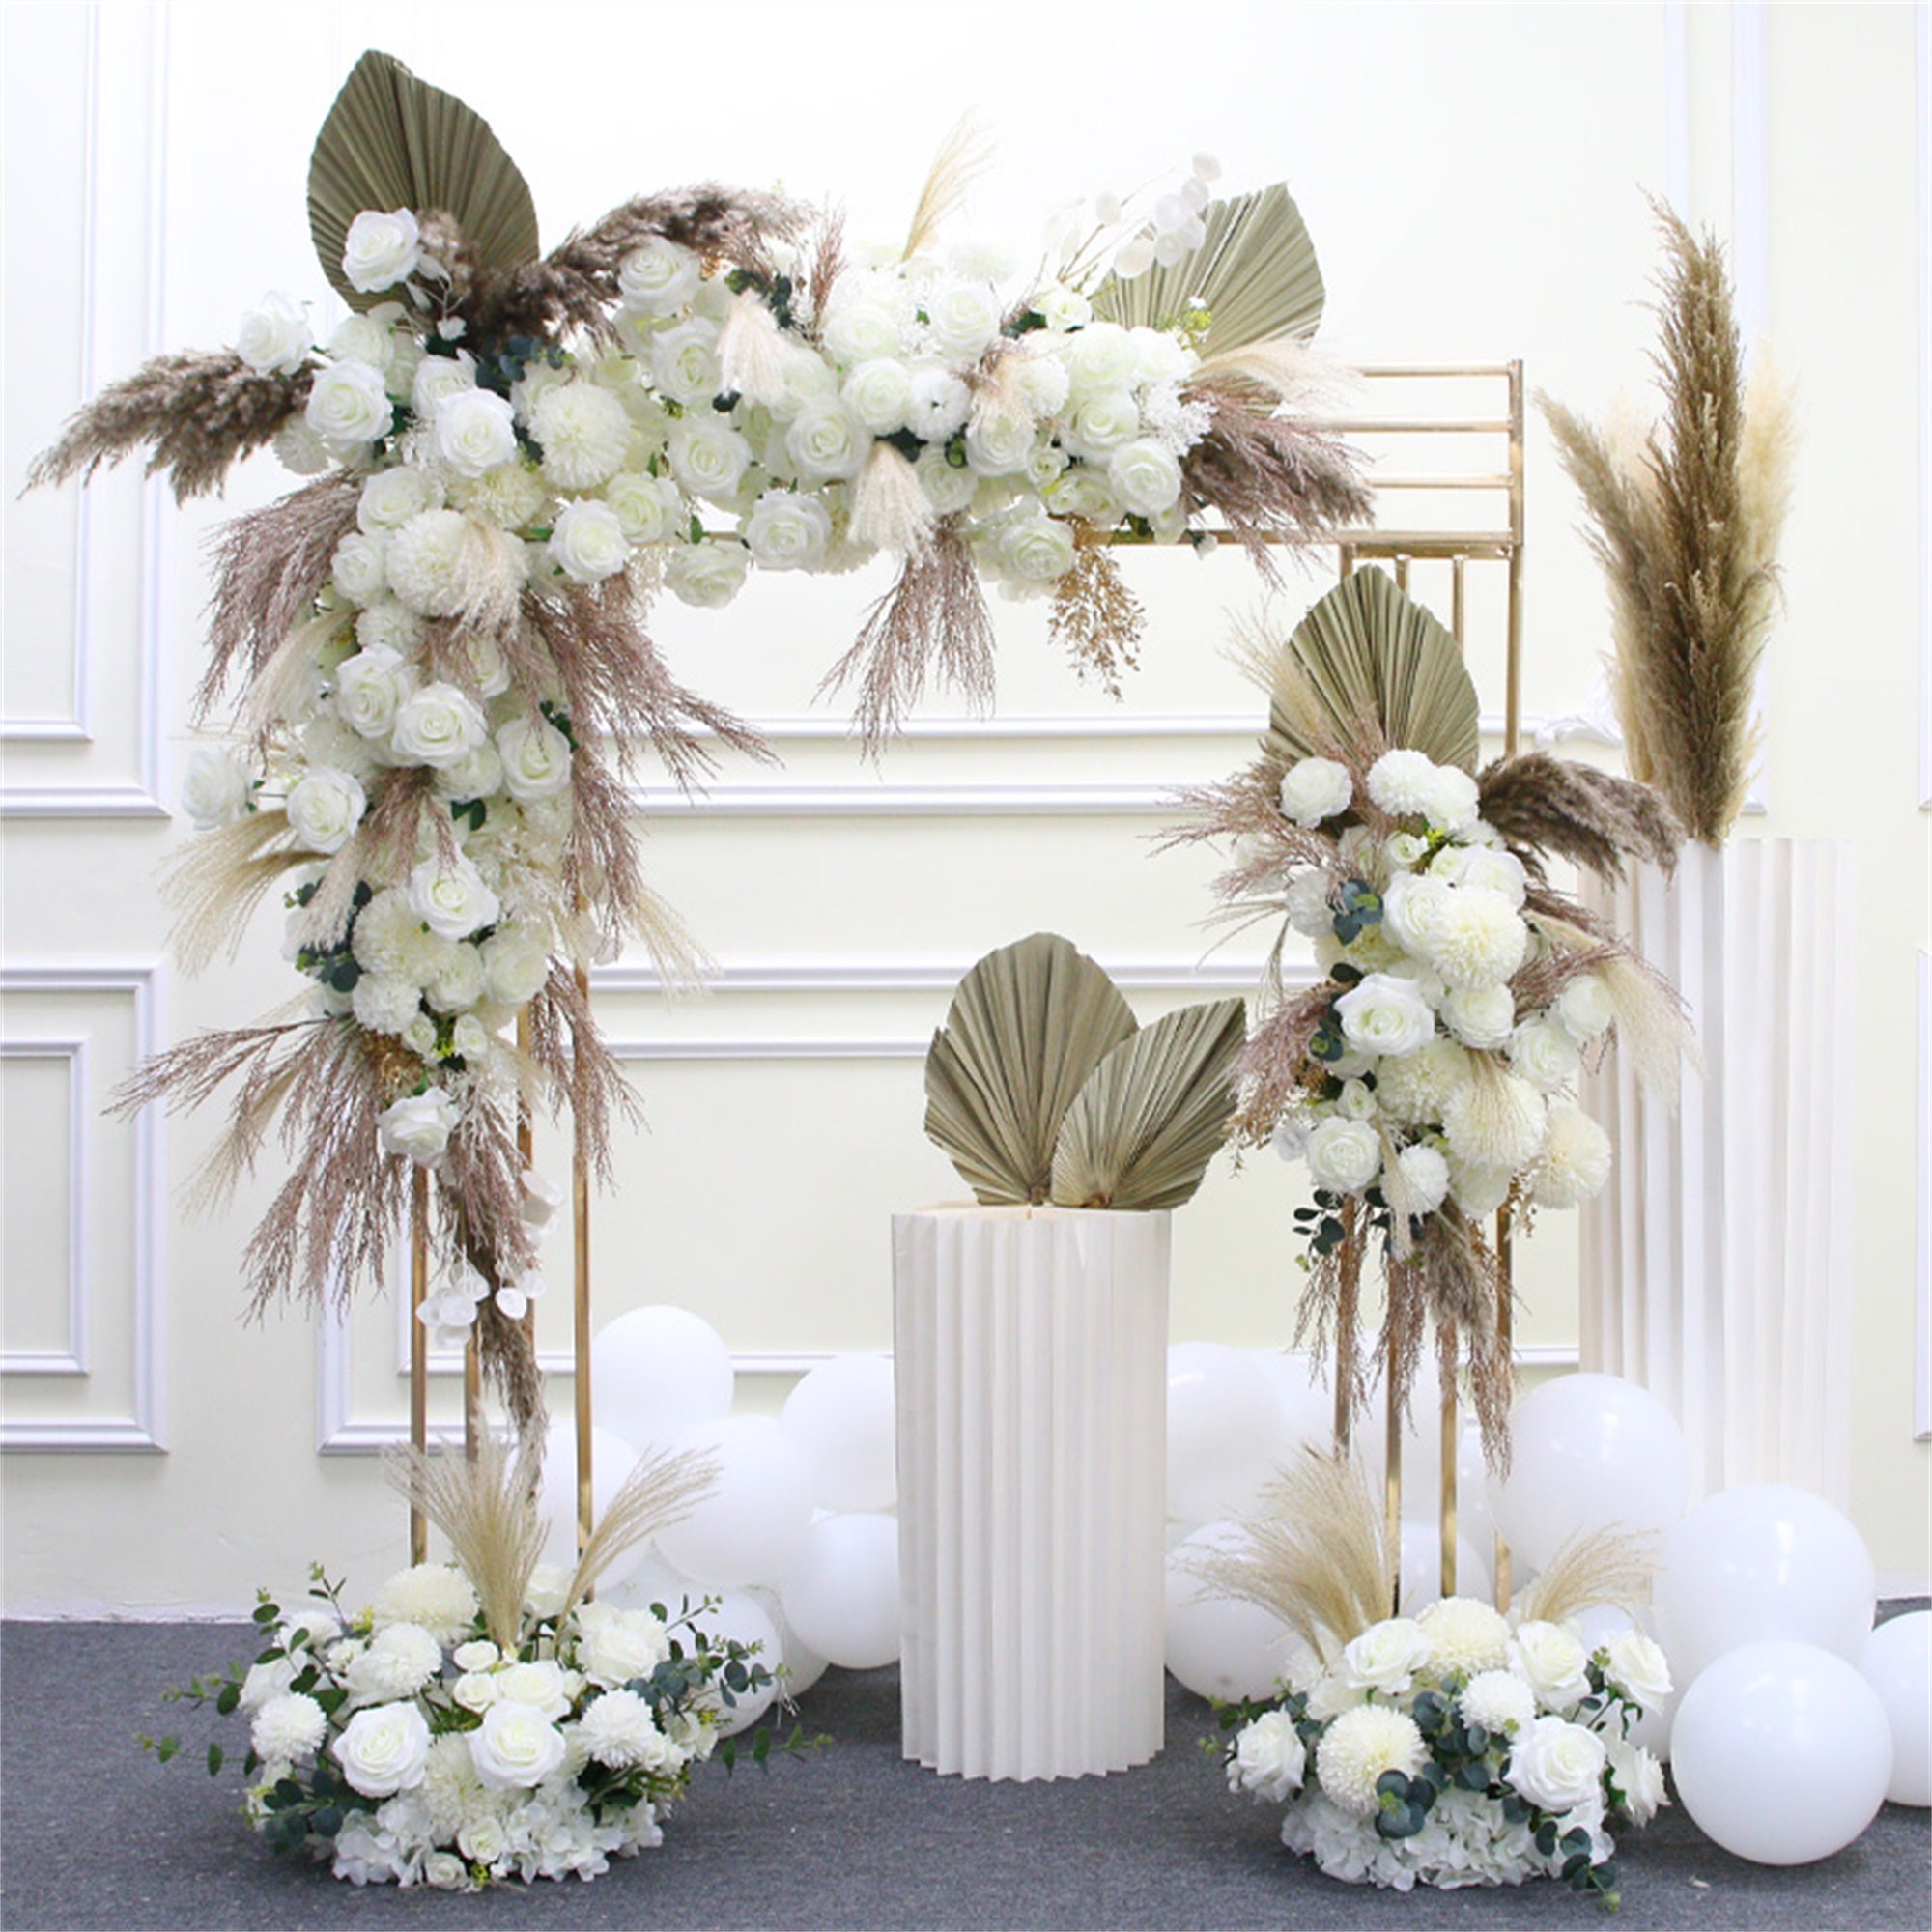 Boho White and Gold Pampas Grass Floral Arrangement Wedding Centerpiece 